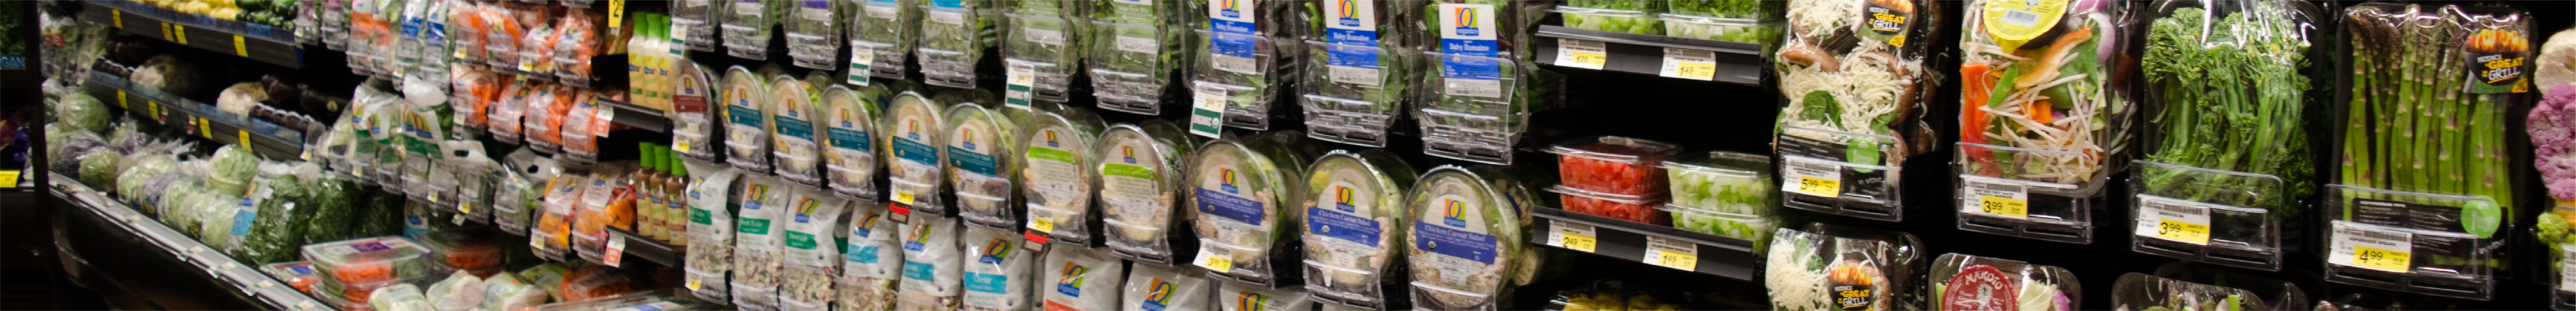 bagged salad display